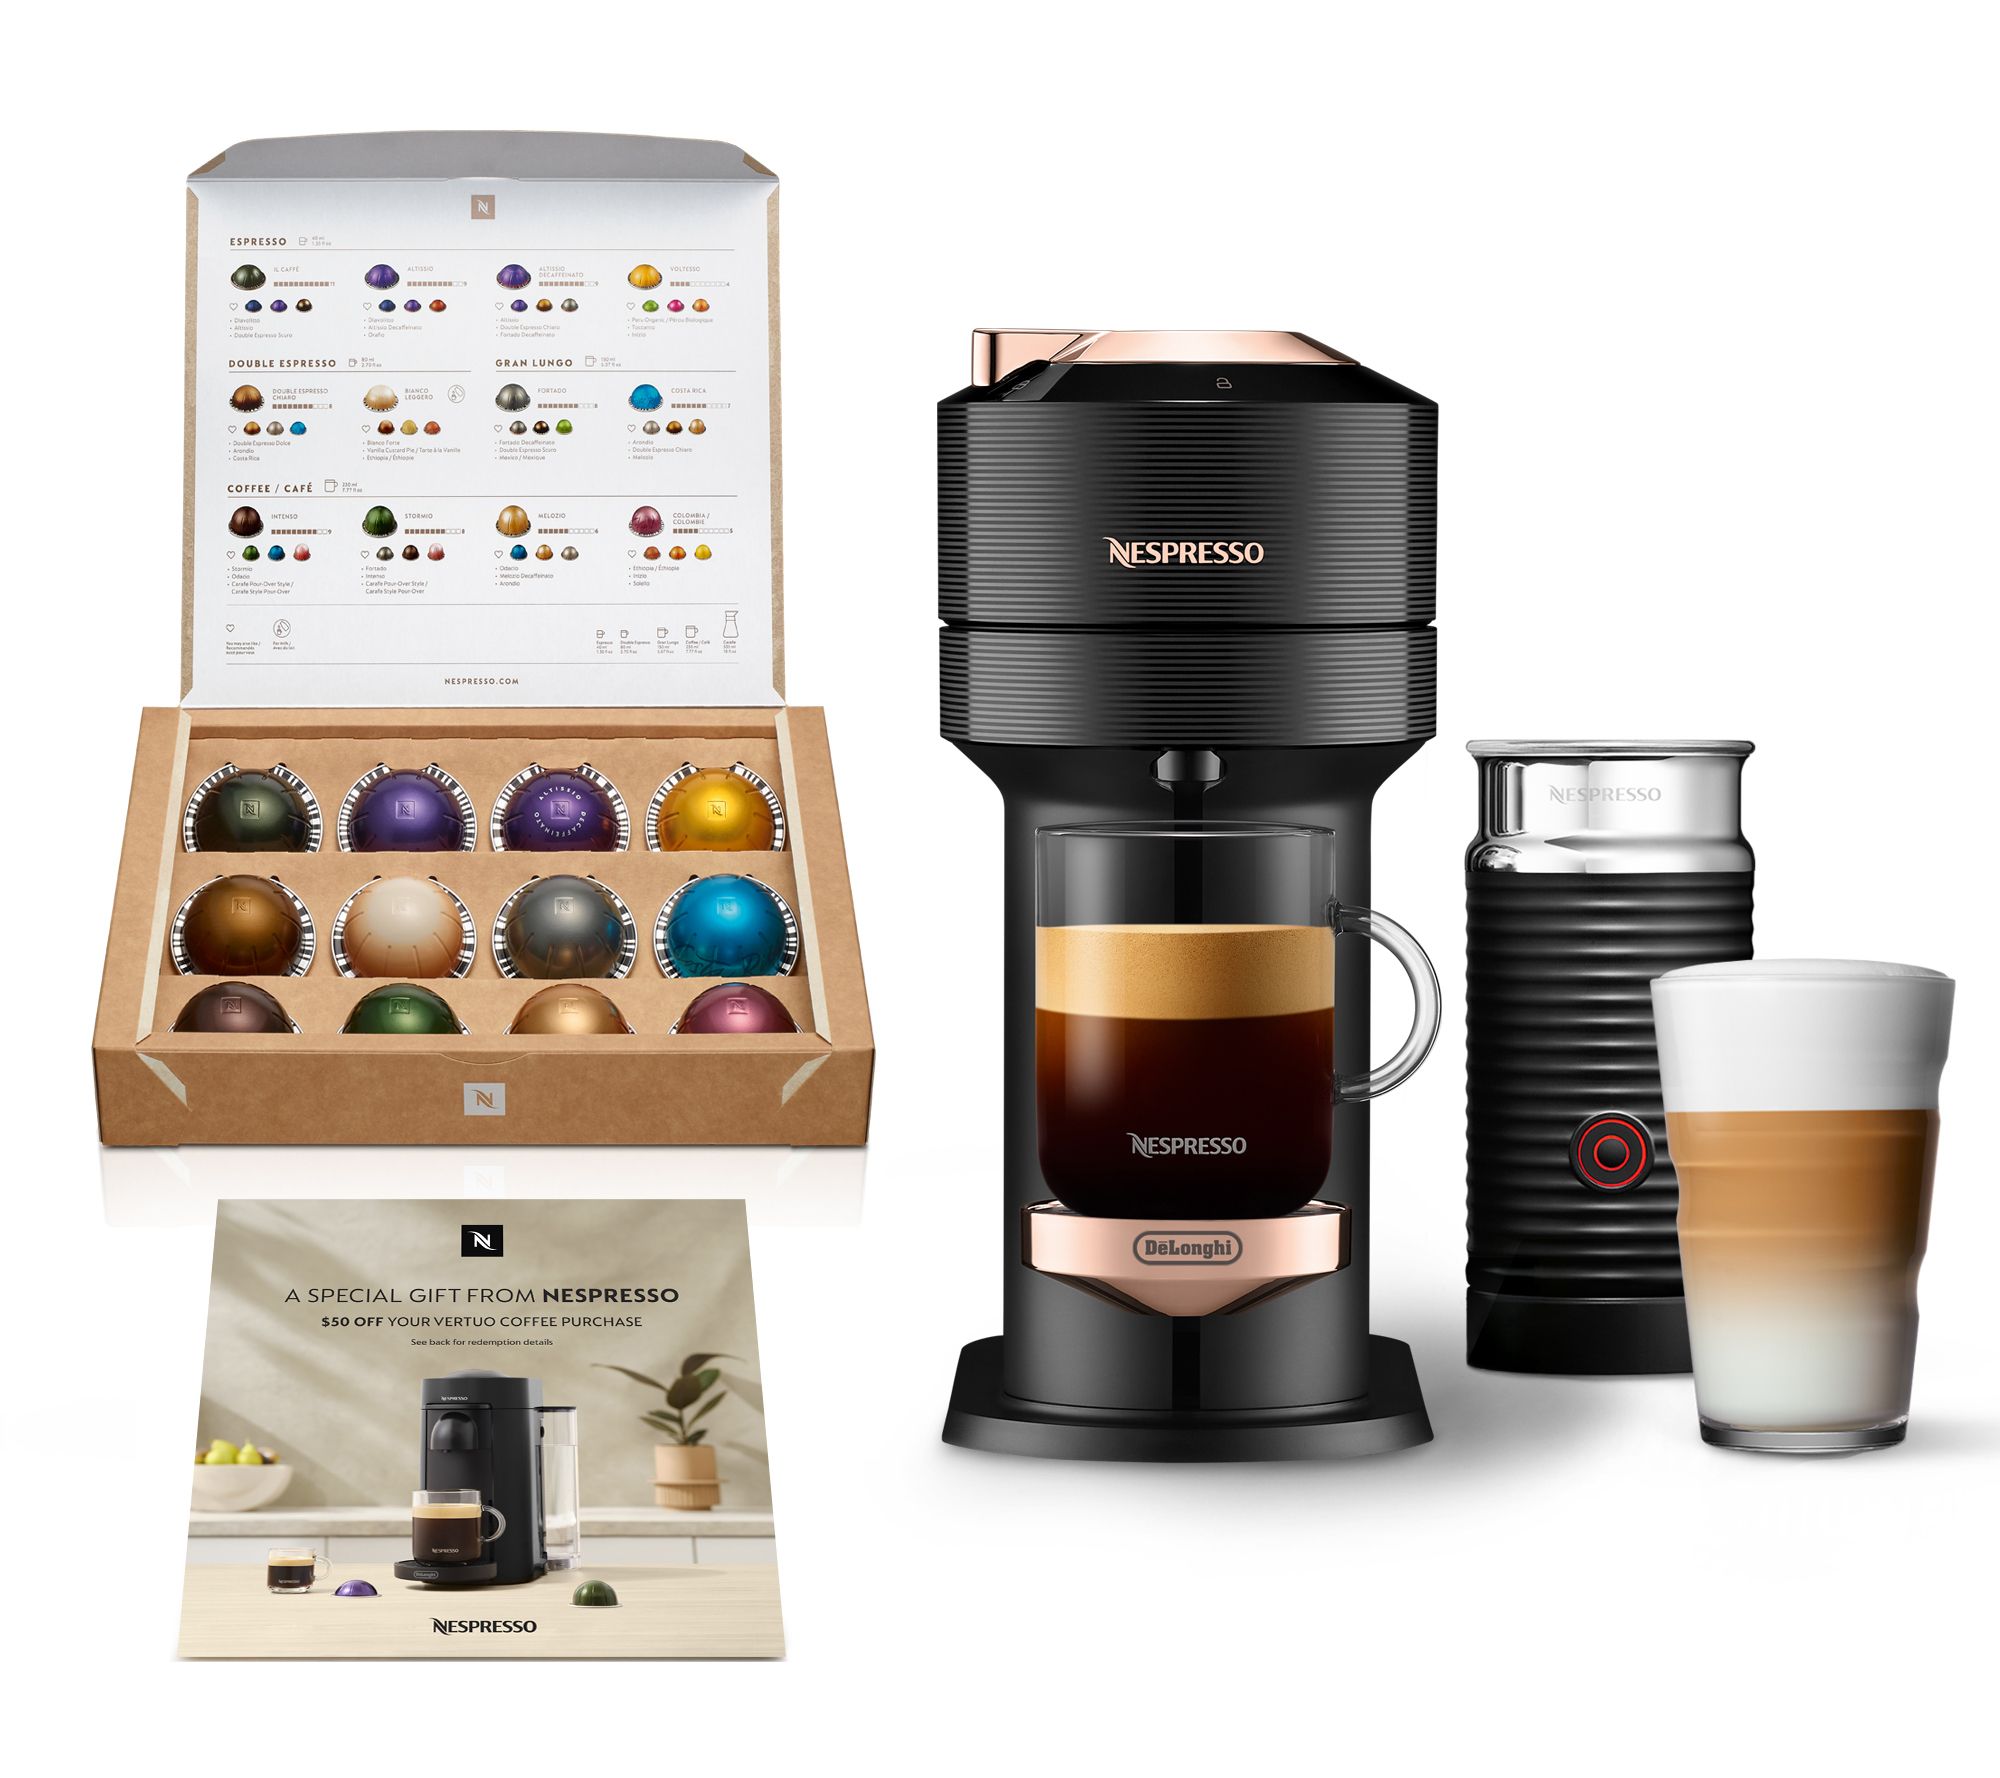 Nespresso Vertuo Next machine Plus Aeroccino milk frother & $50 Nespresso coffee voucher - $149.98 with promo code